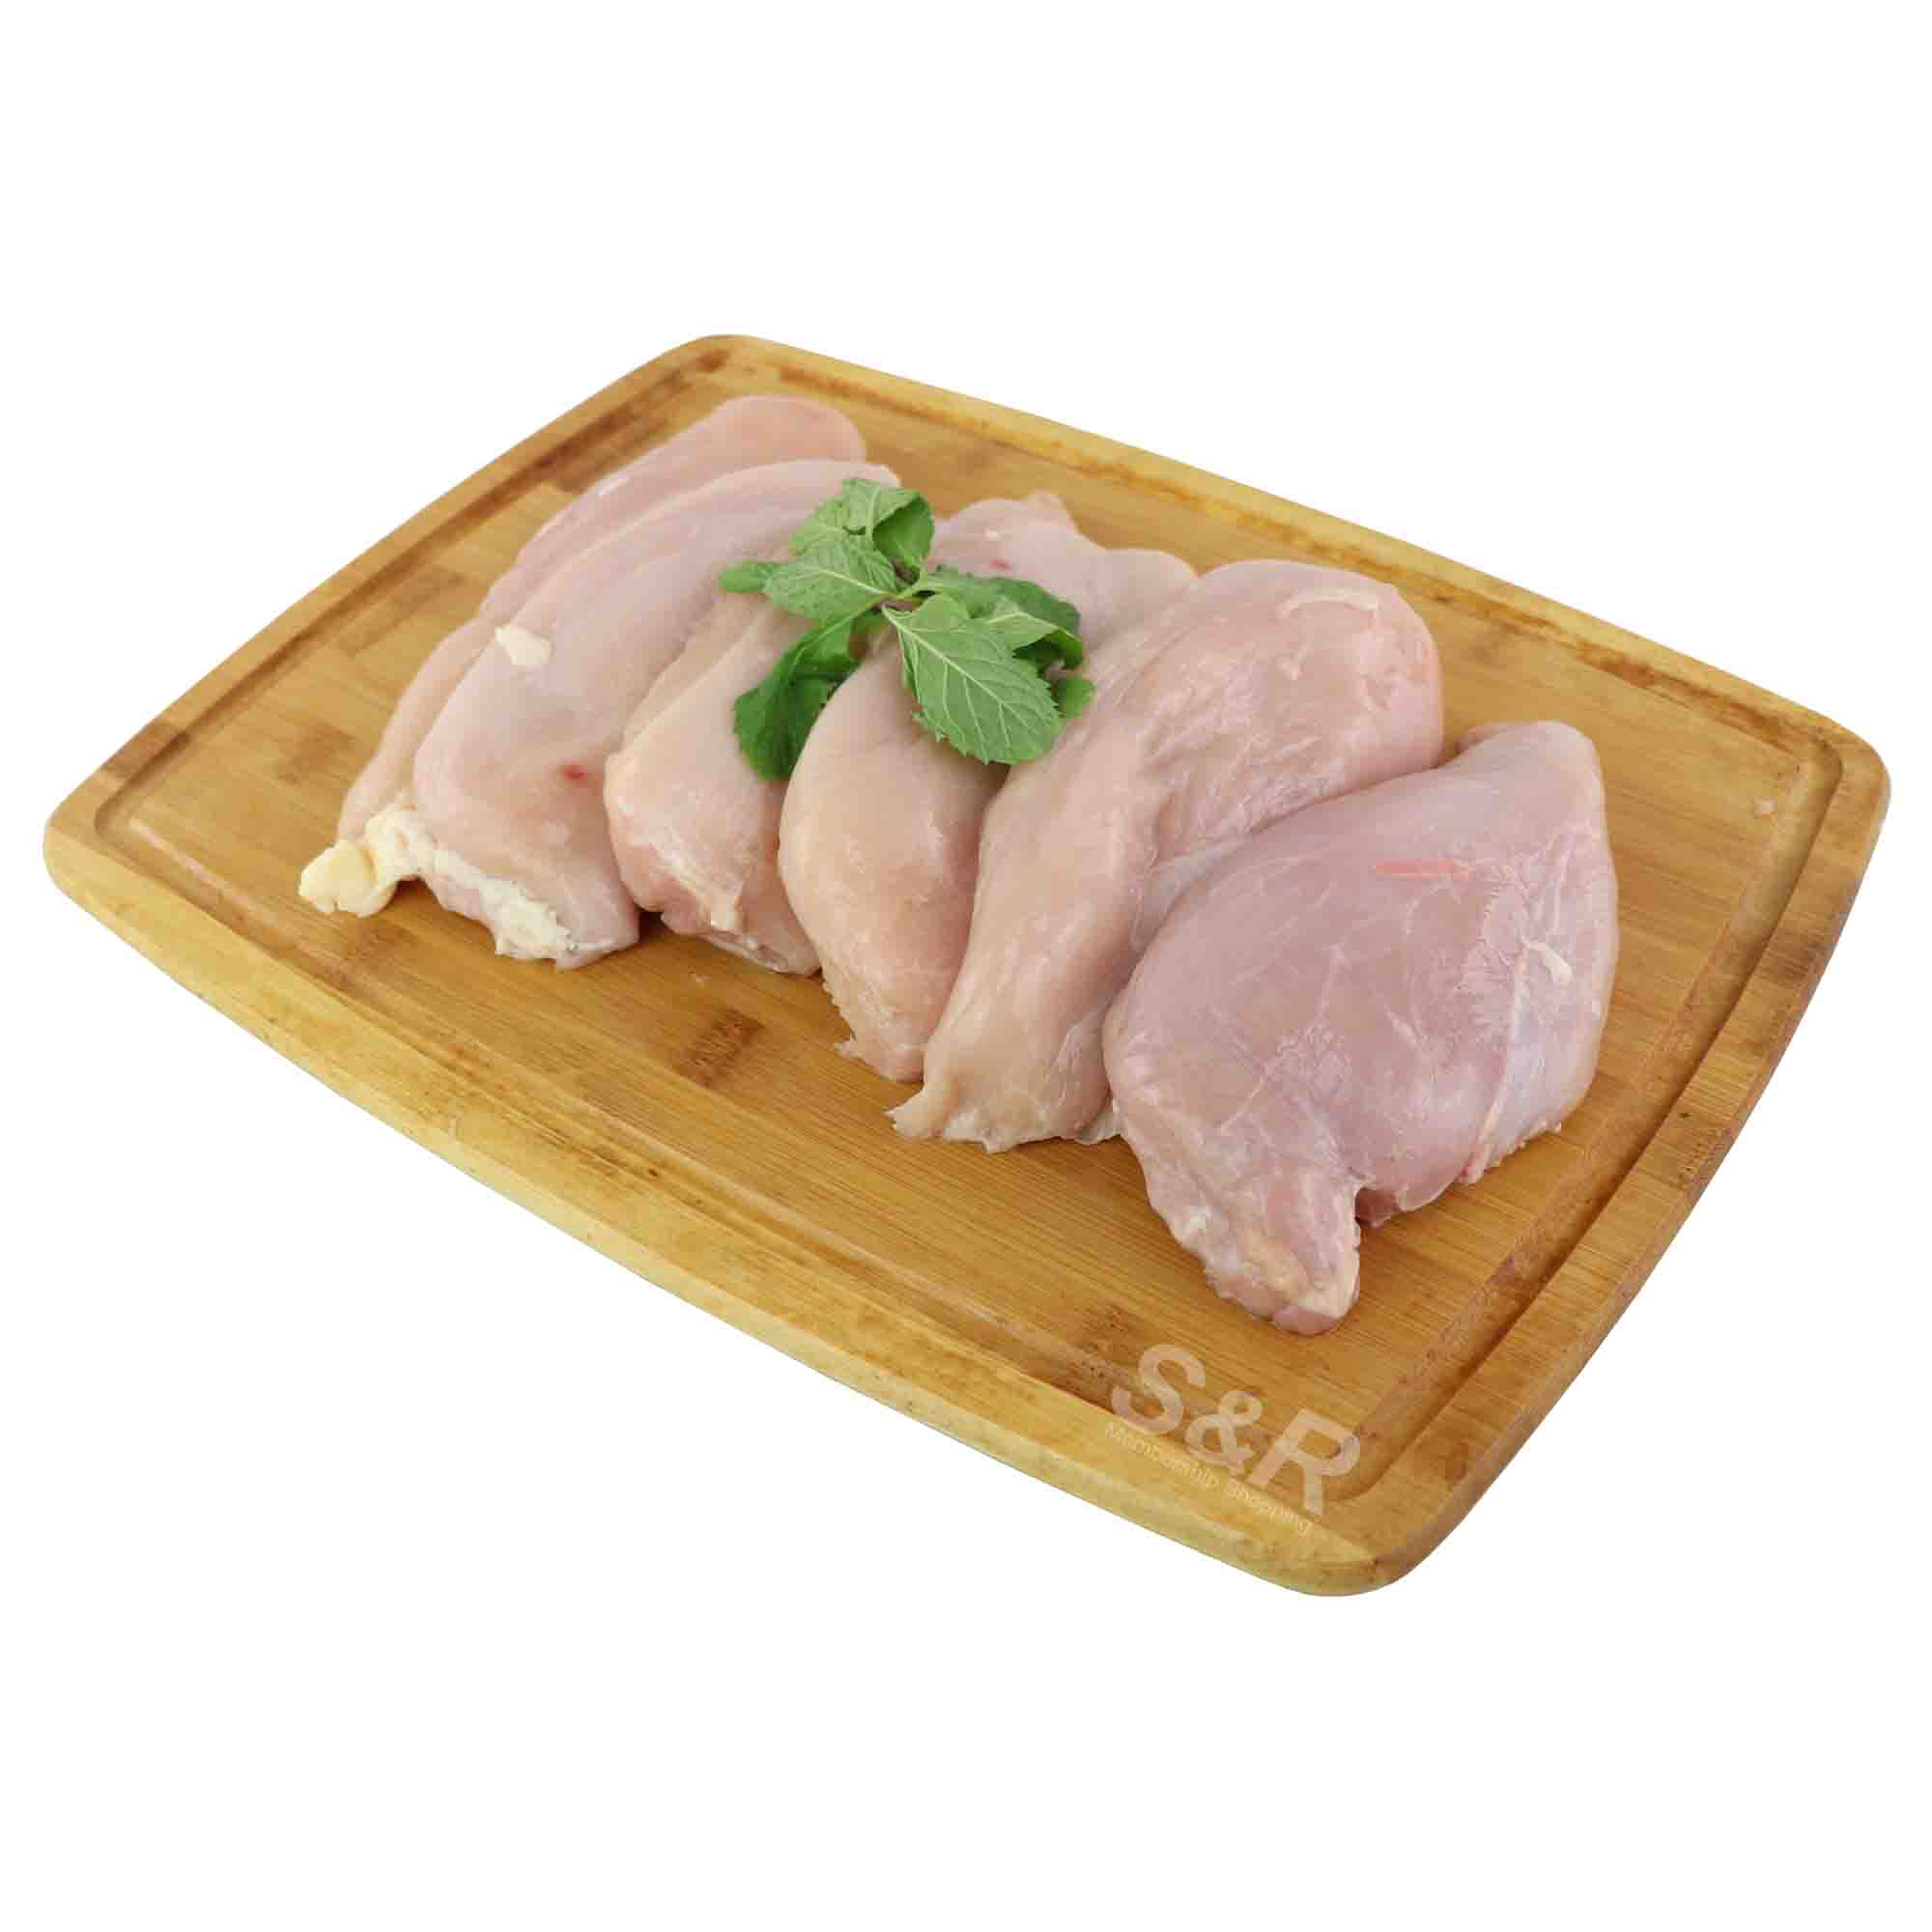 Member's Value Skinless Chicken Breast Fillet approx. 3kg